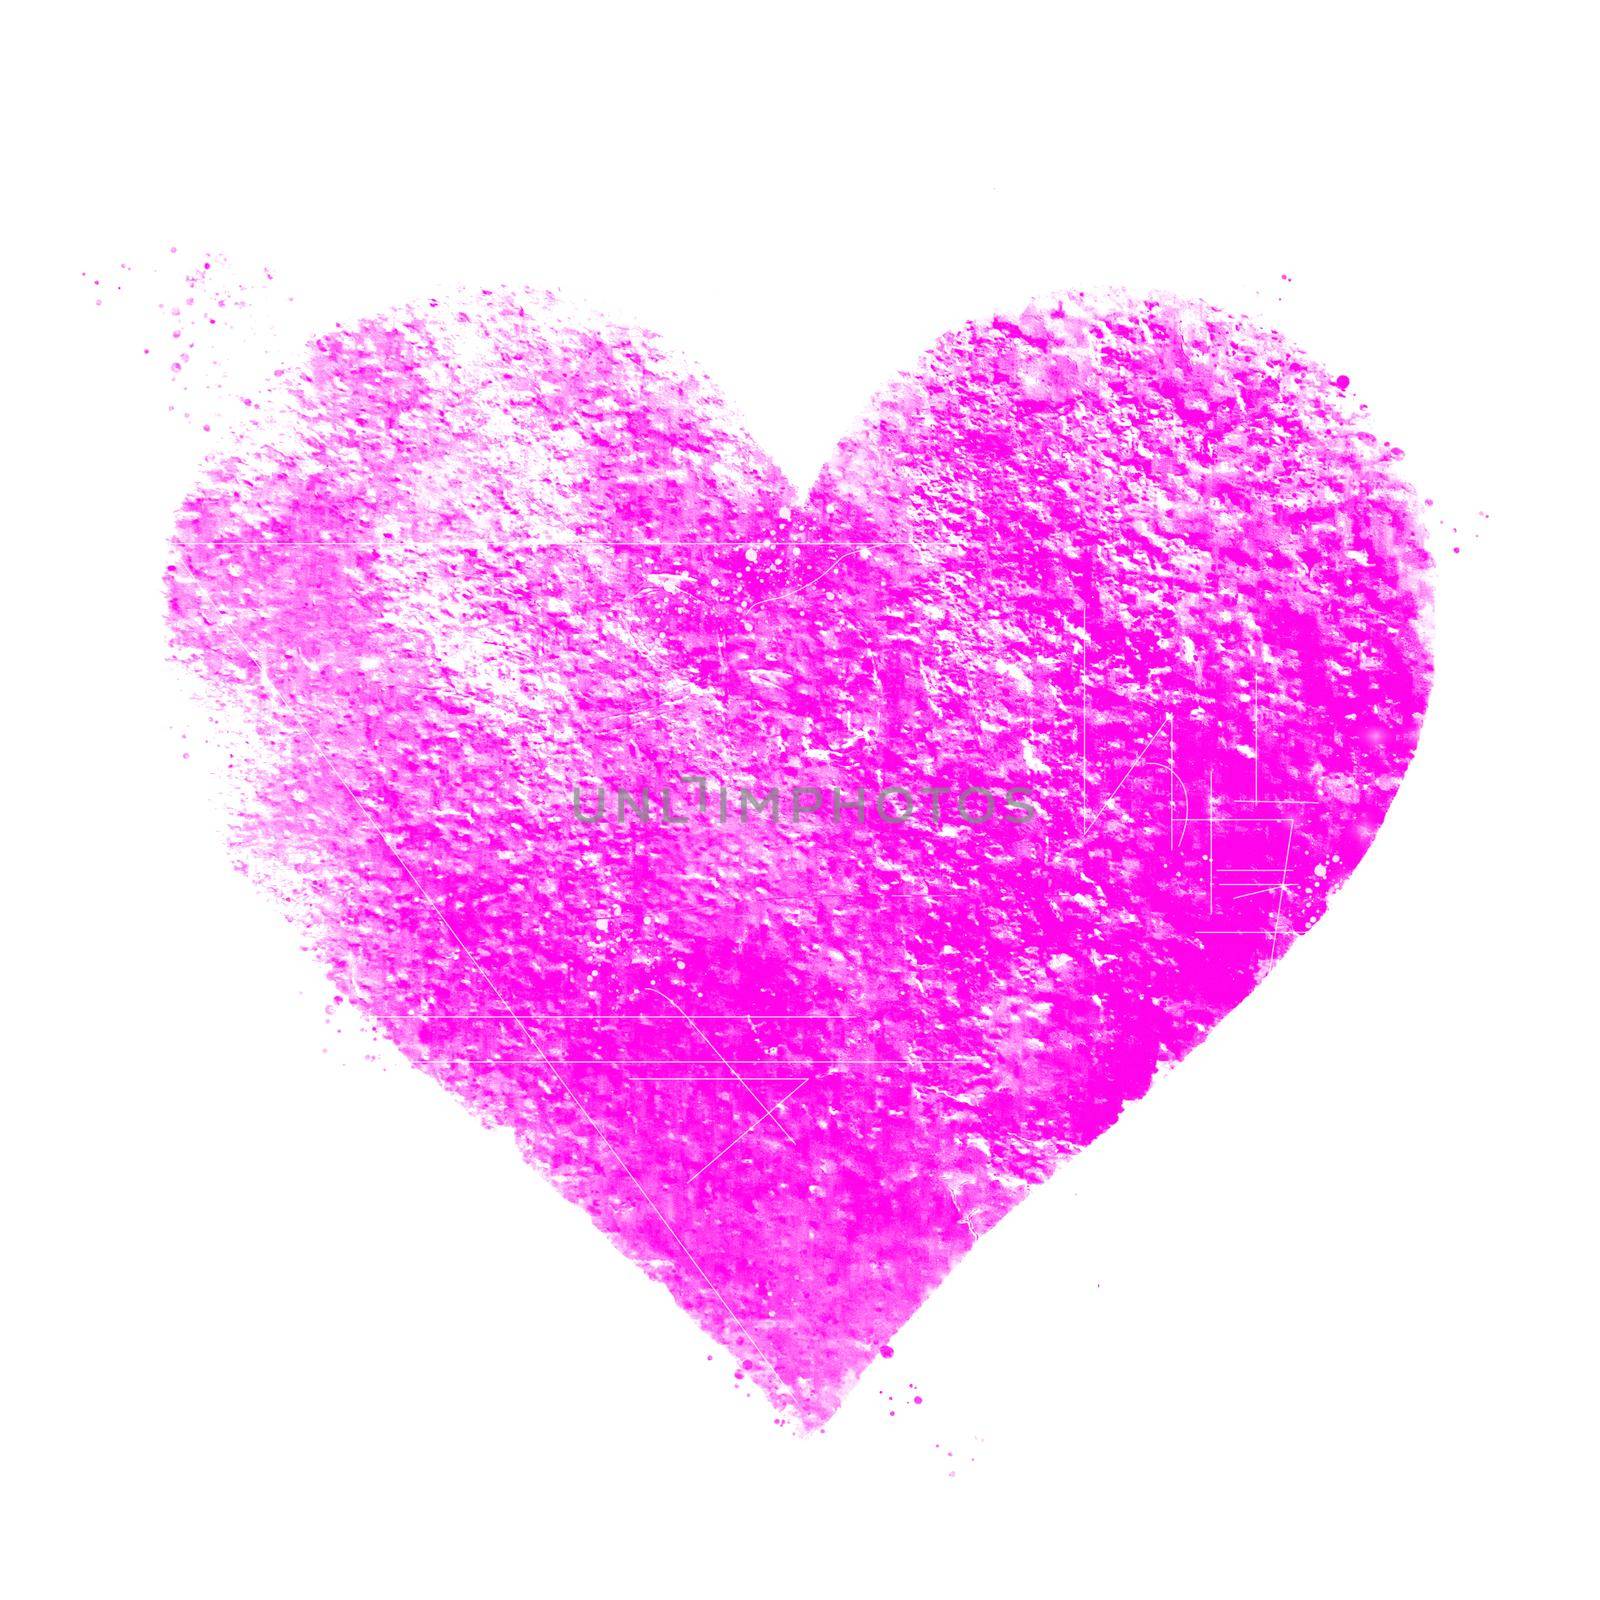 Vintage pink heart. Great for Valentine's Day, wedding, scrapbook, grunge surface textures.